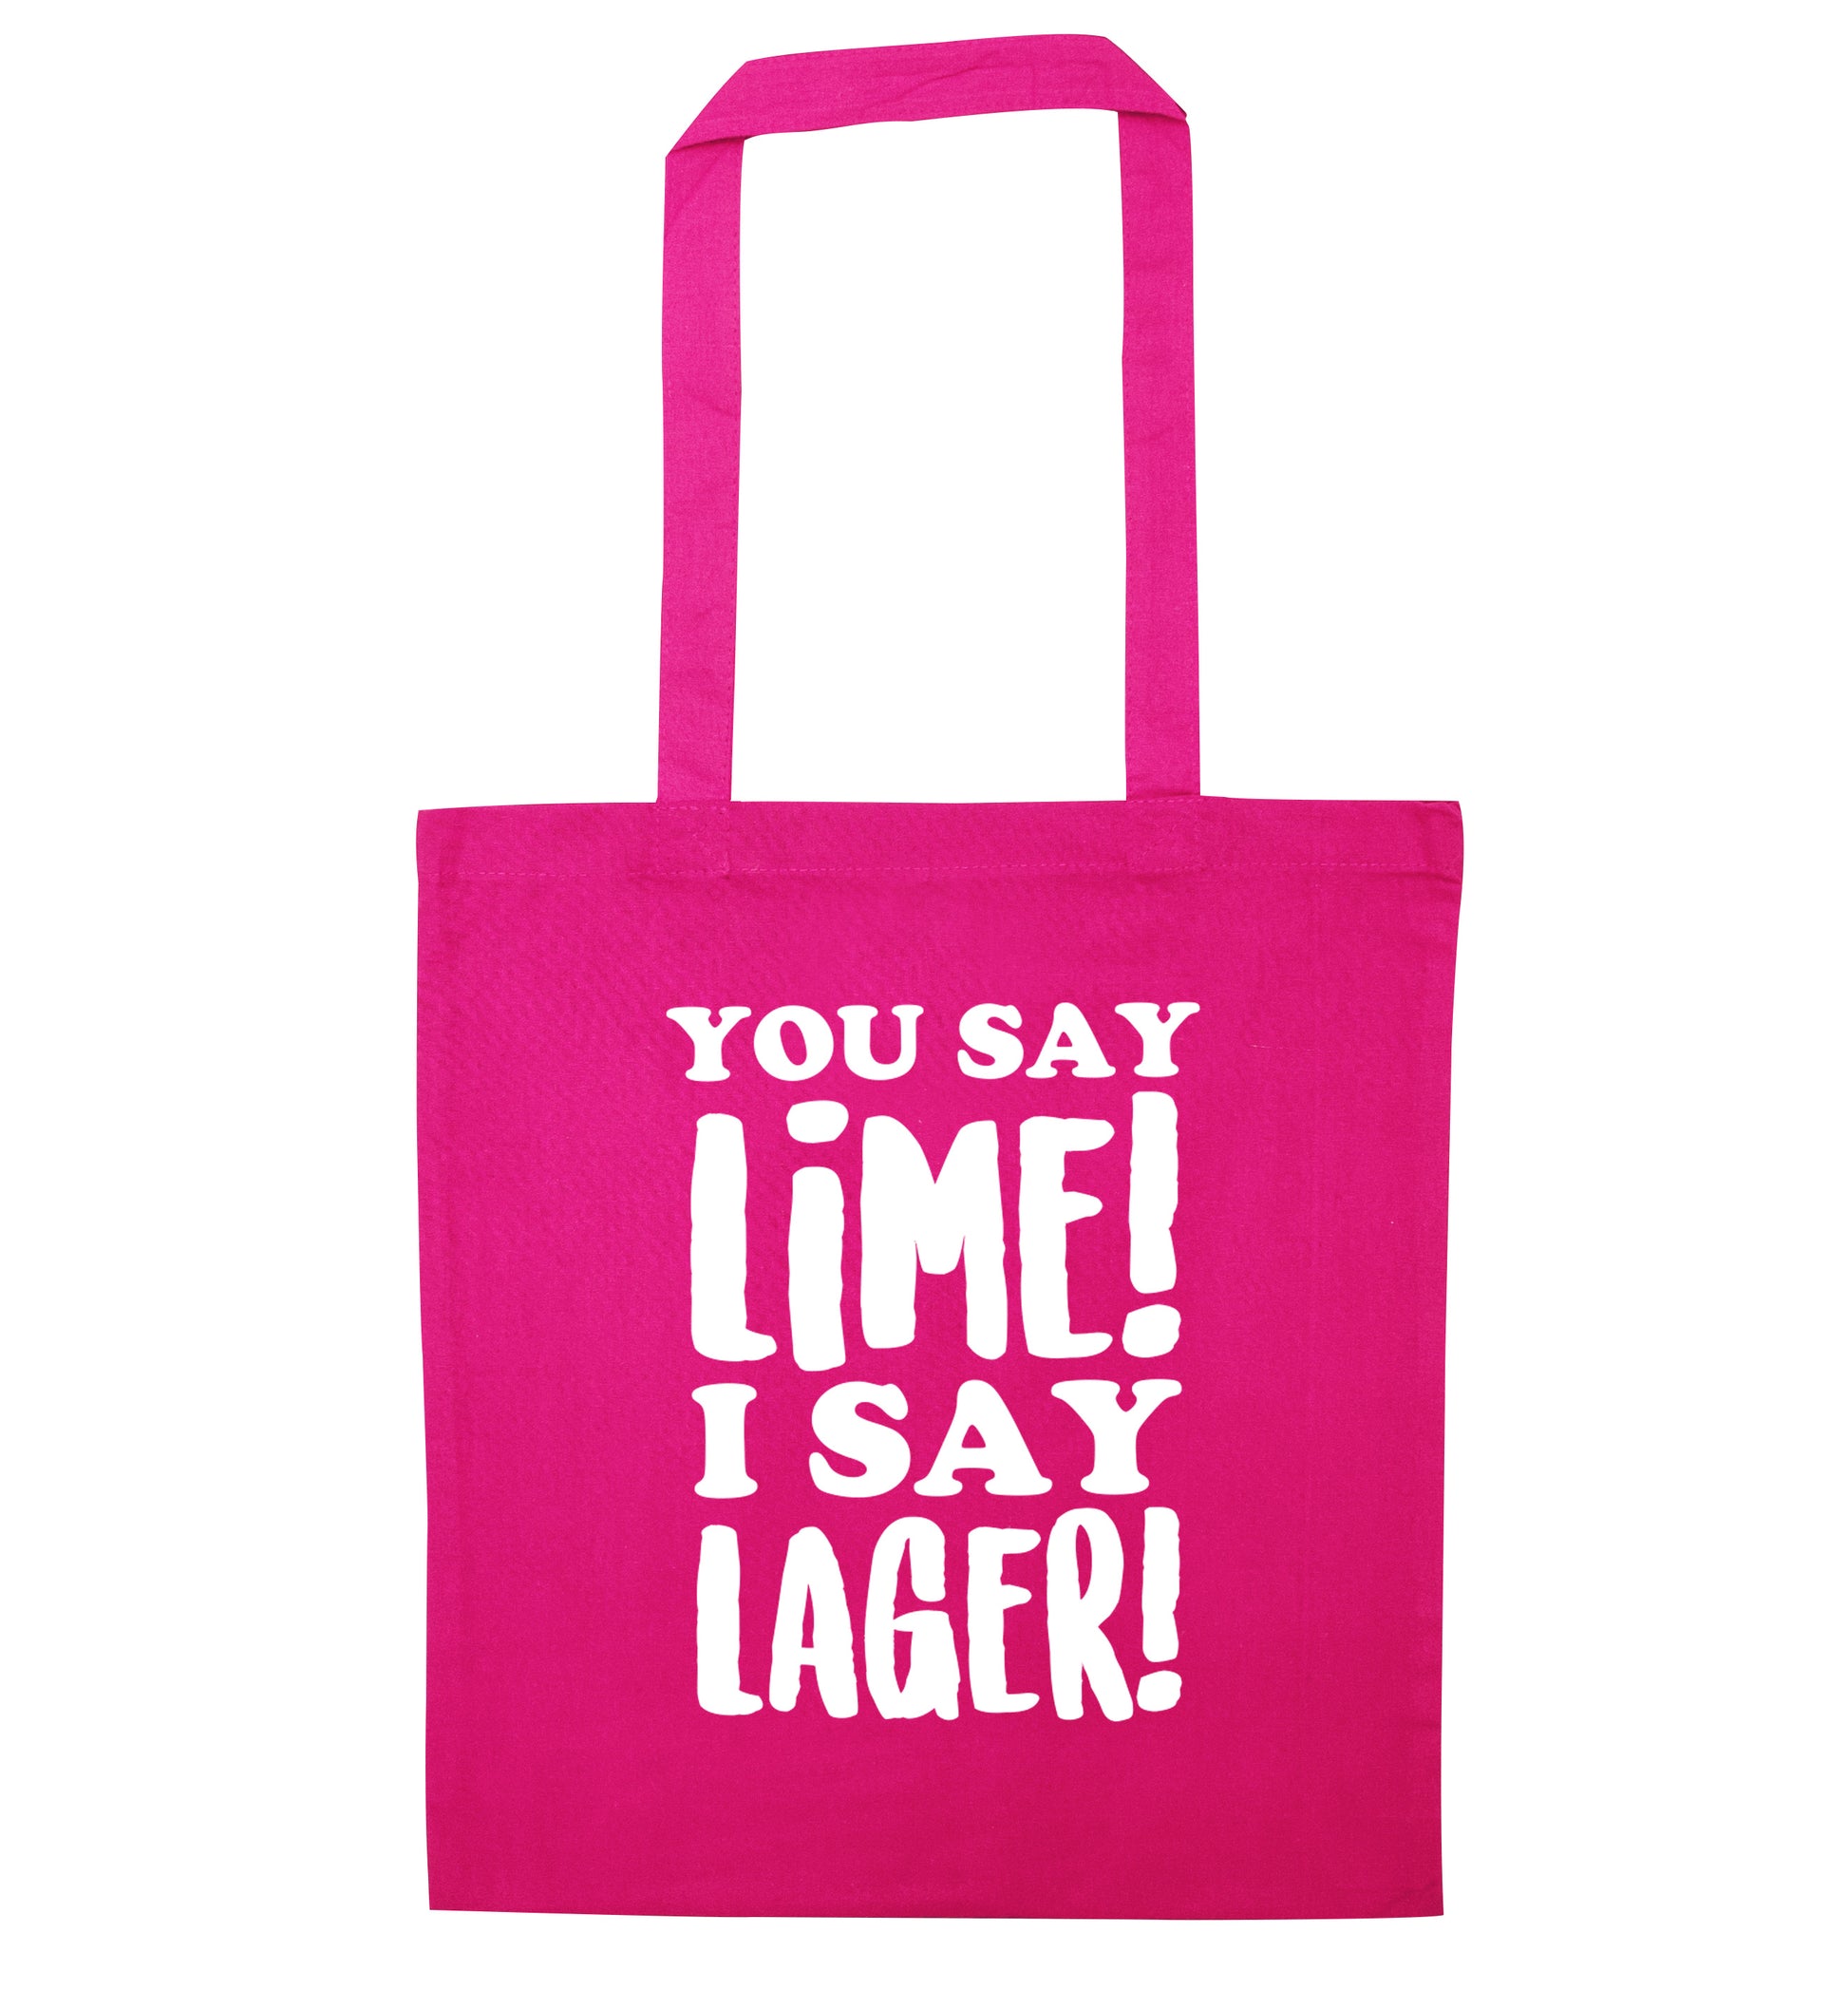 You say lime I say lager! pink tote bag